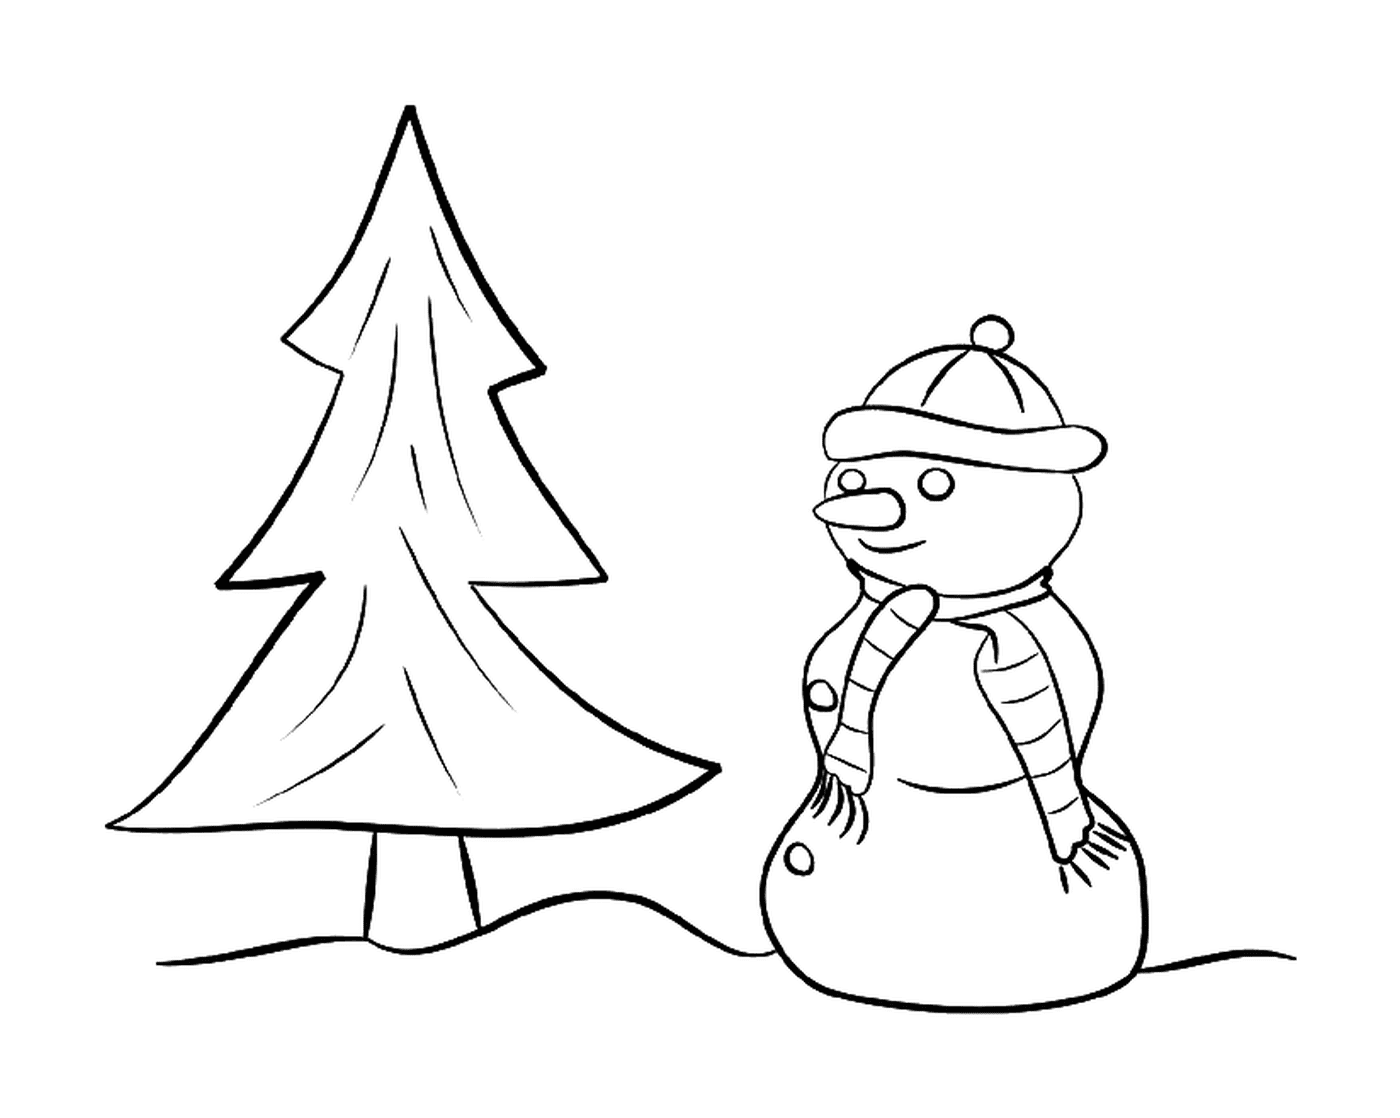  A snowman next to a Christmas tree 